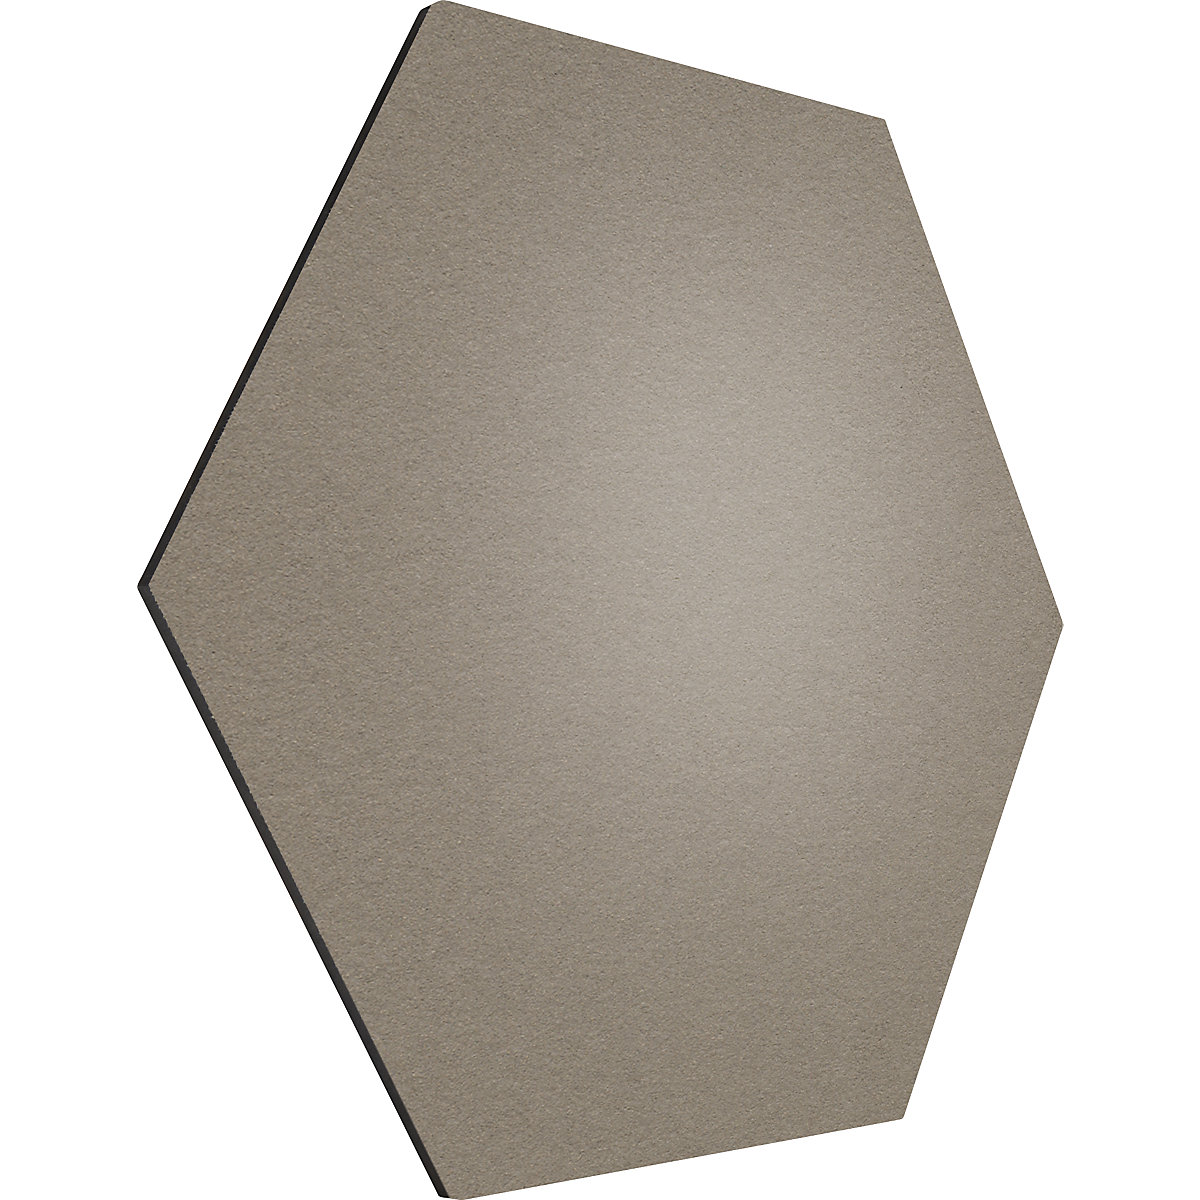 Hexagonal designer pin board – Chameleon, cork, WxH 600 x 600 mm, taupe-25